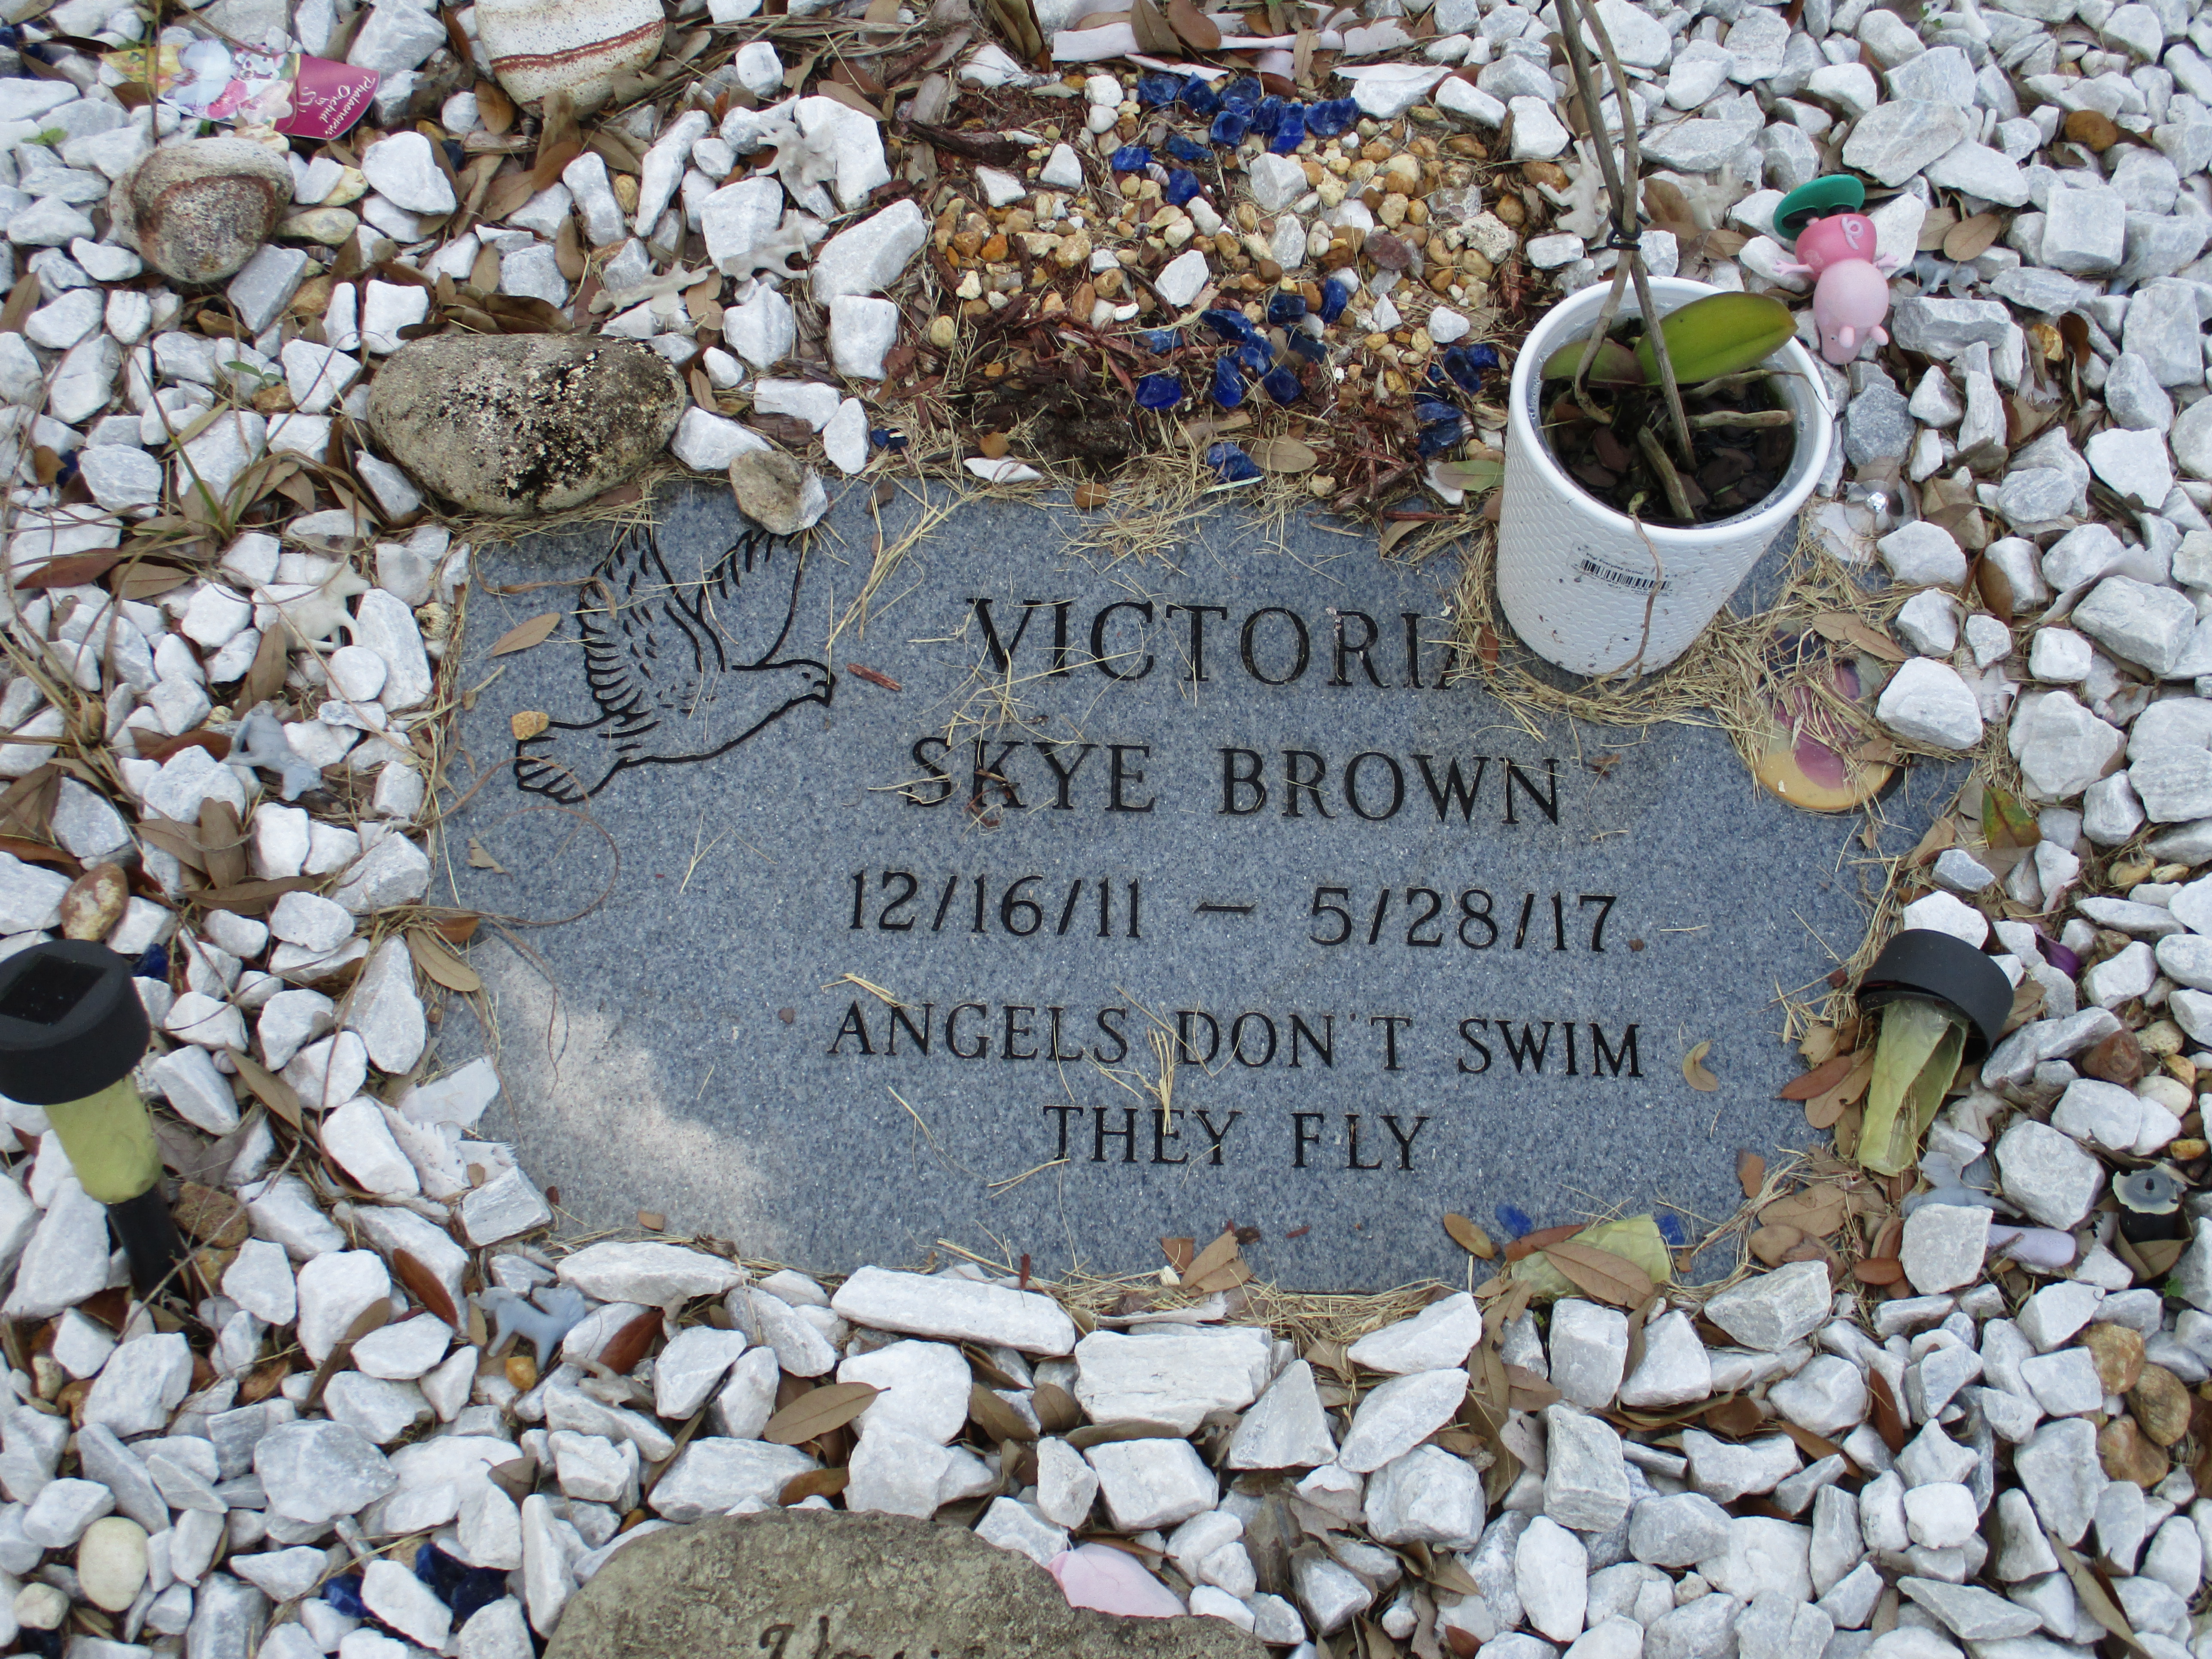 Victoria Skye Brown